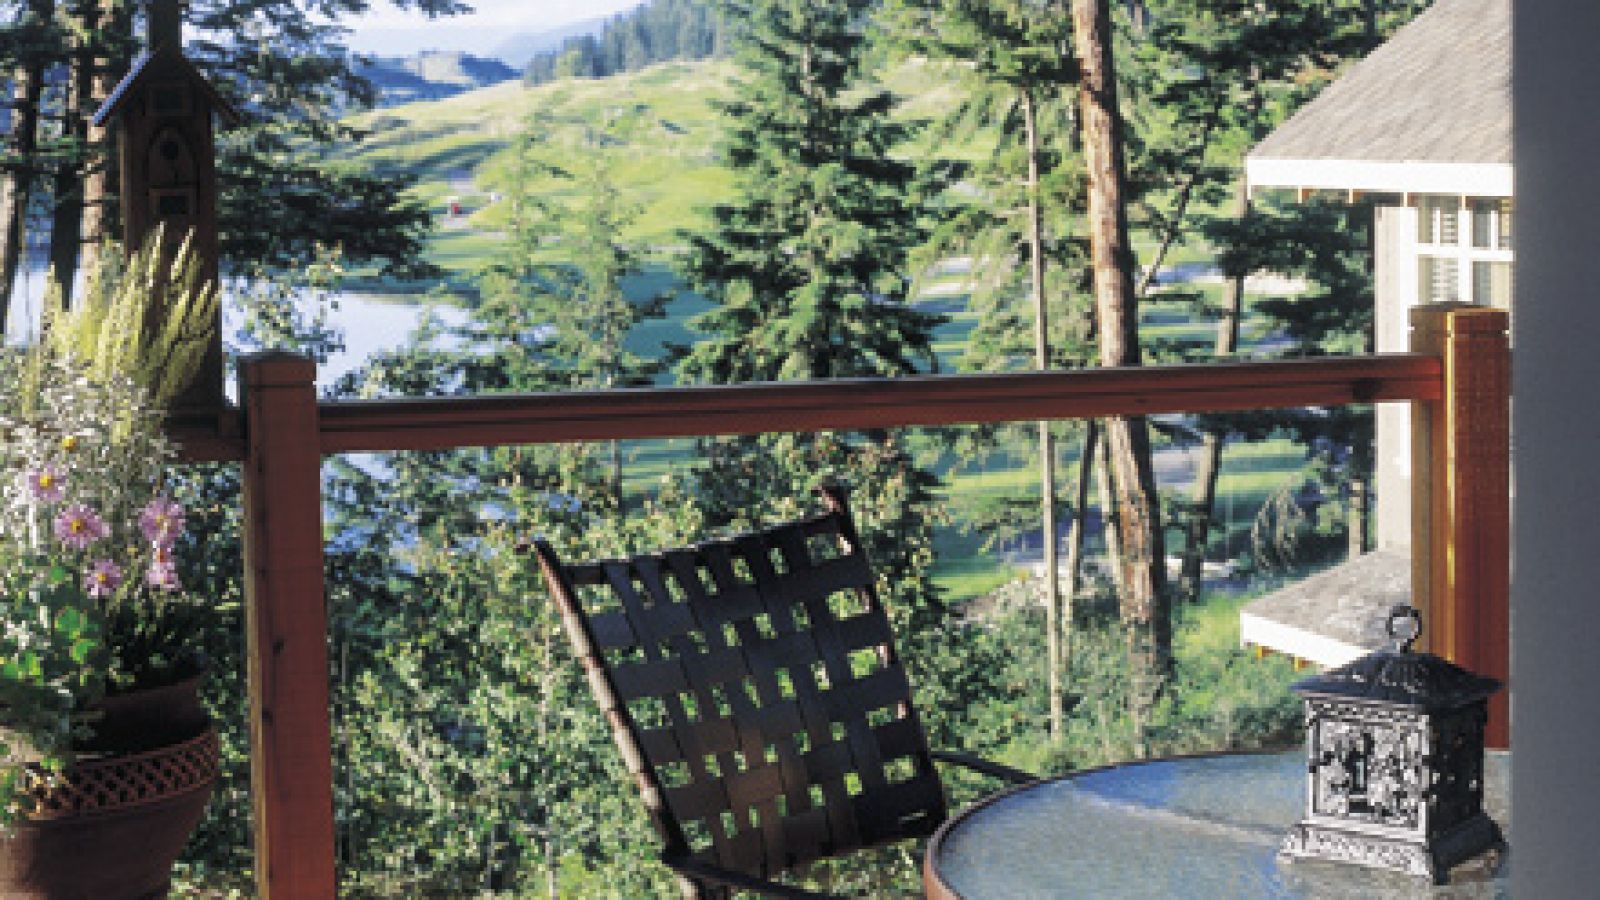 Predator Ridge Resort - Deck and View